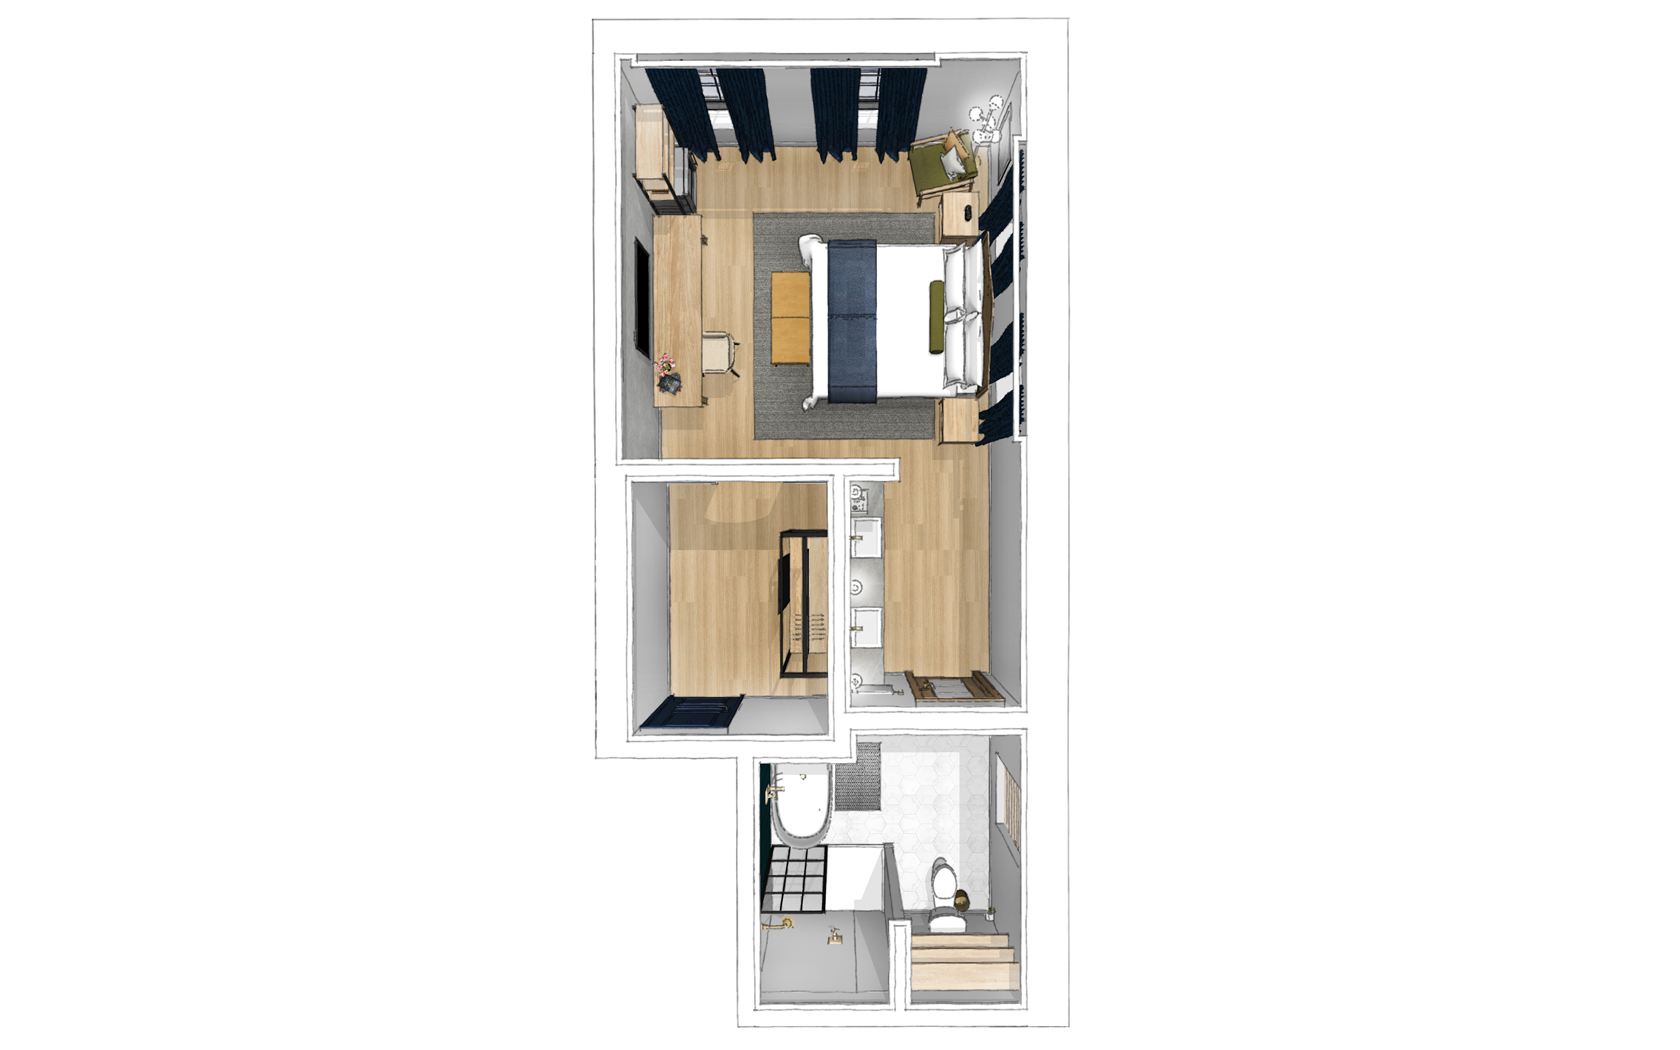 Floorplan for Spa Suite